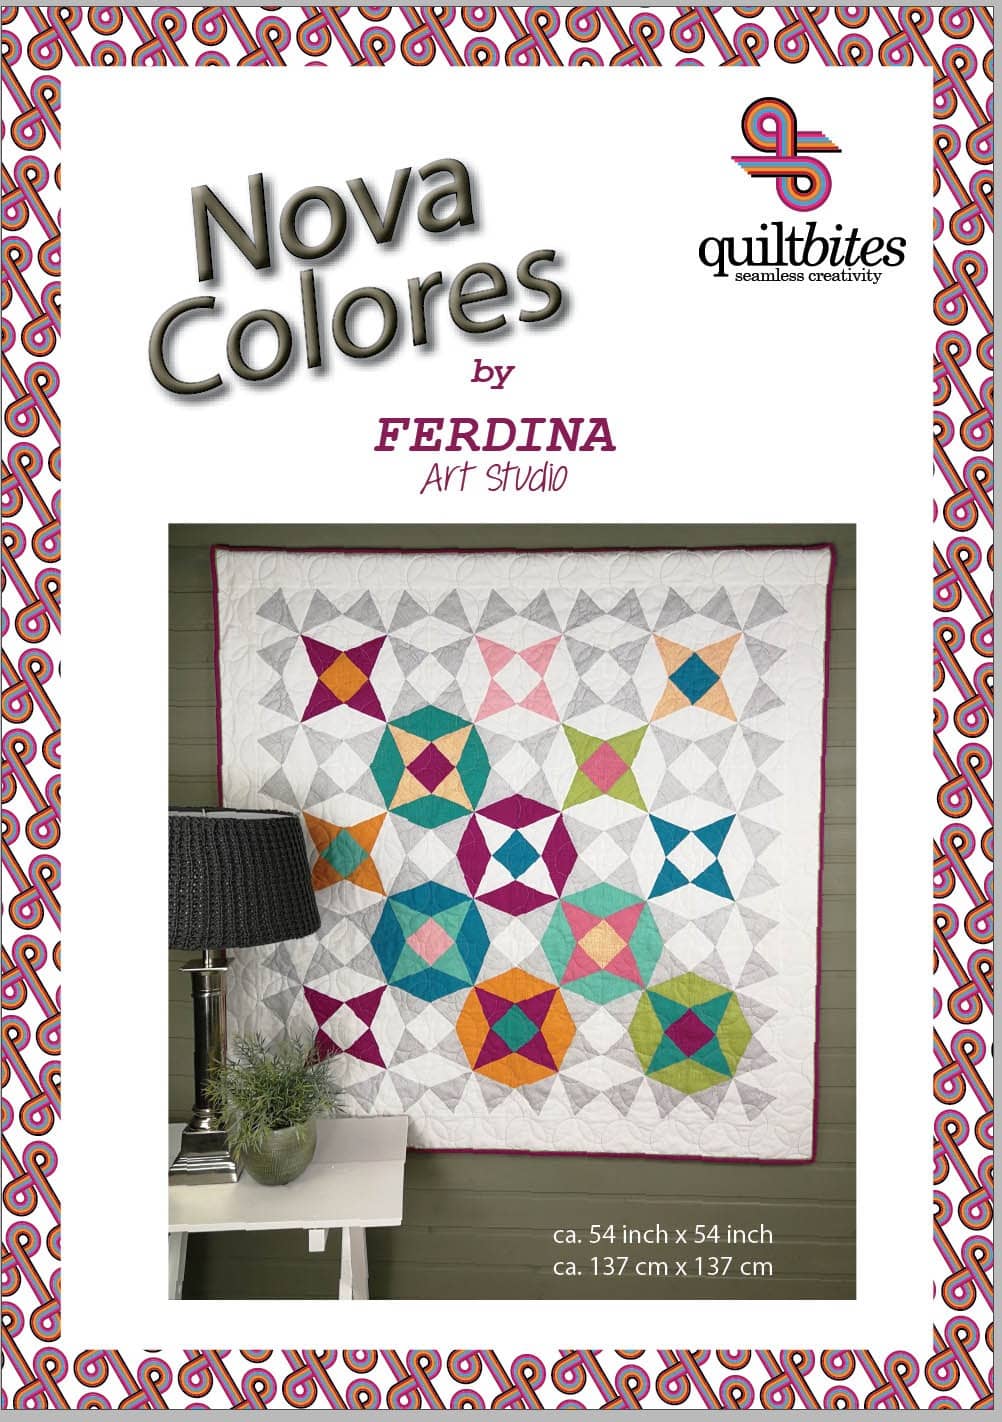 Nova Colores quilt patroon